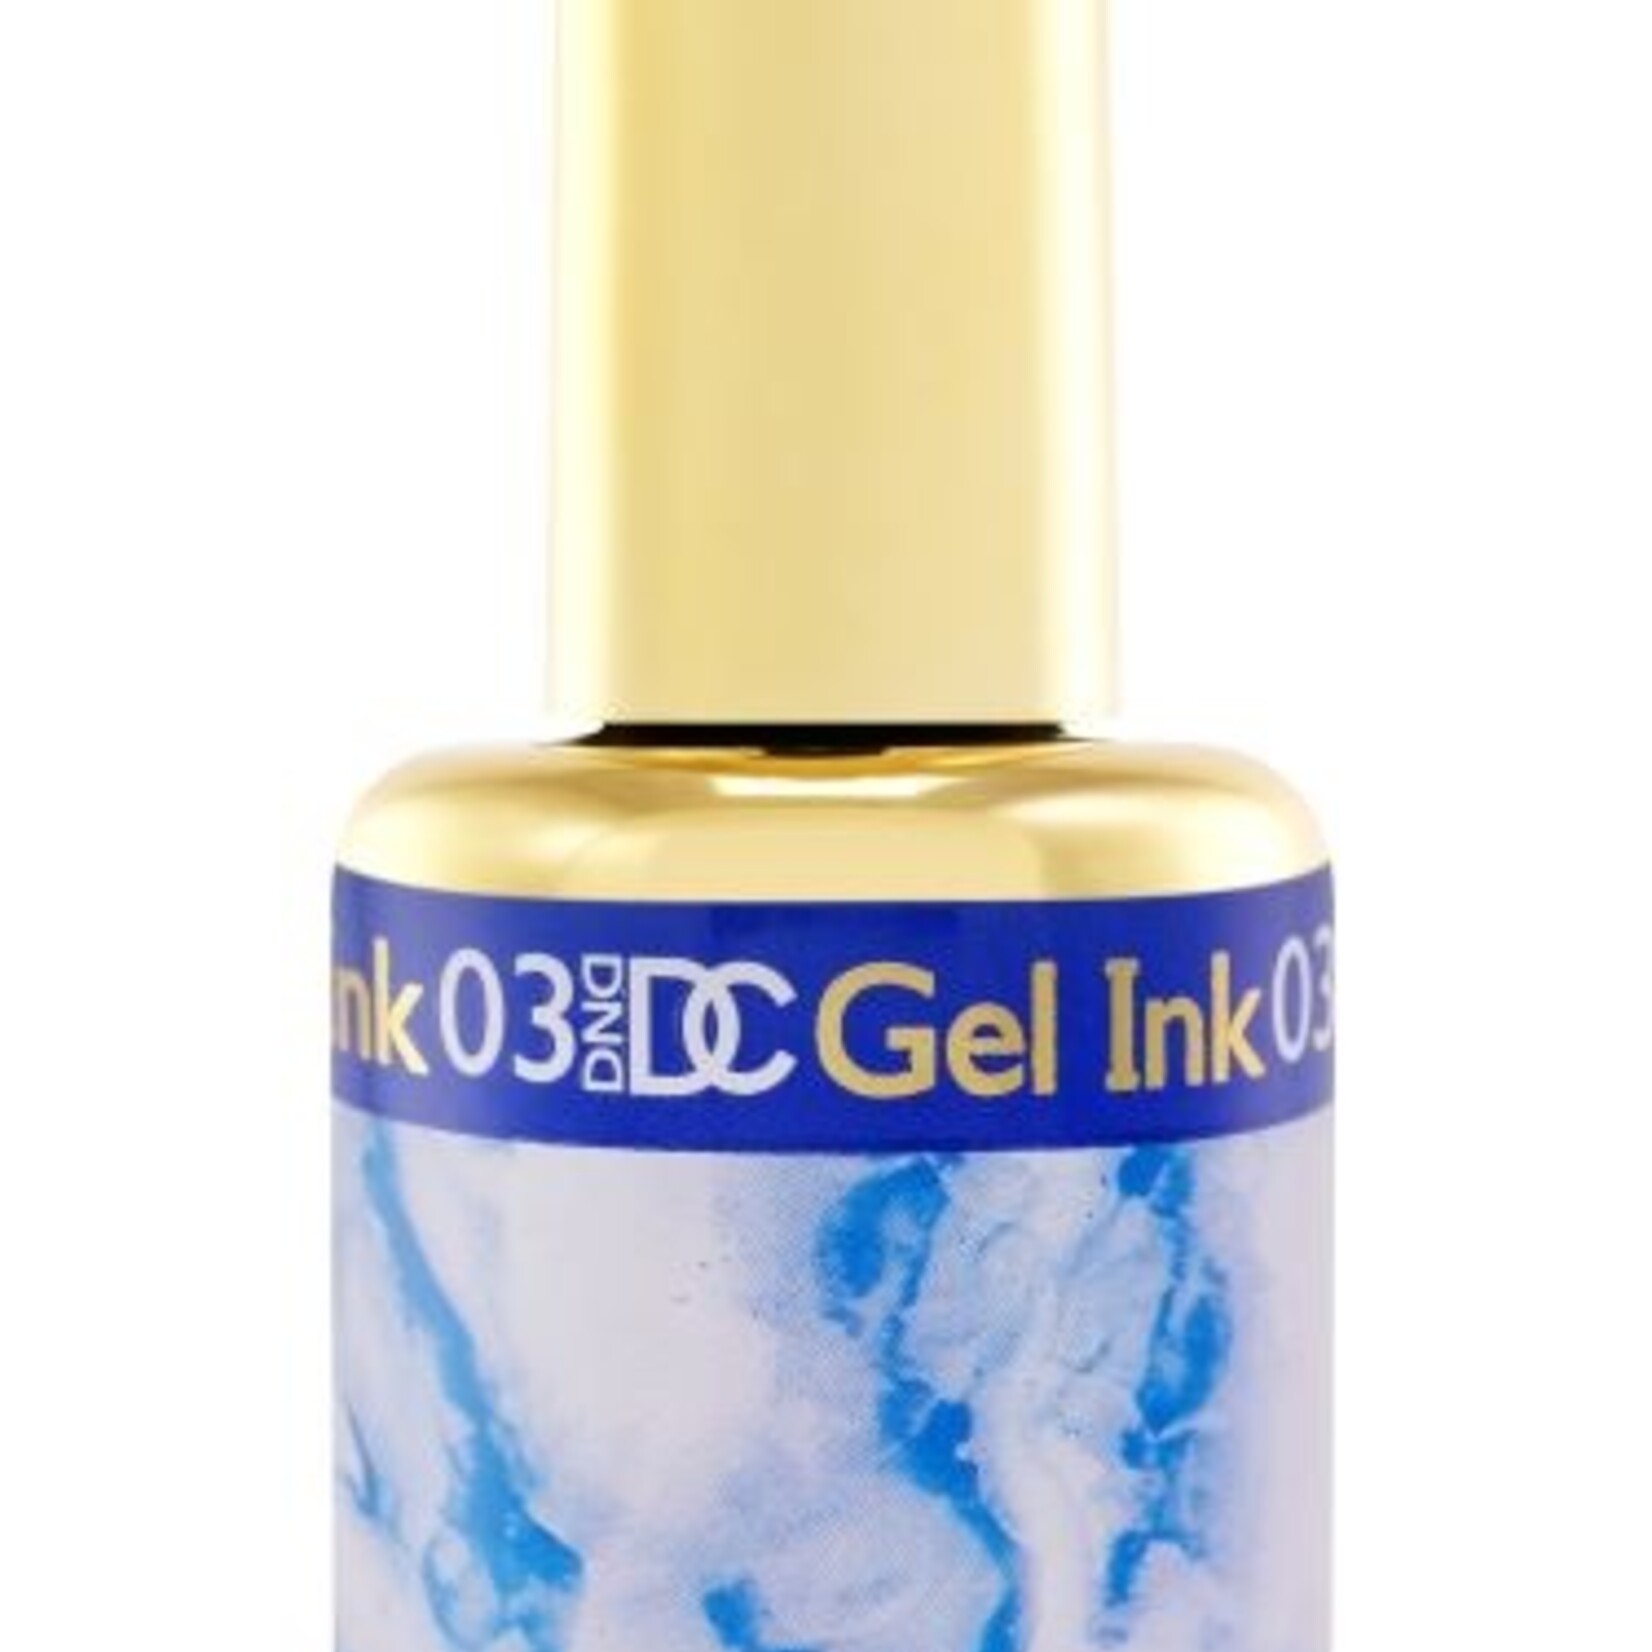 DC - Marble Gel Ink - 03 - Blue - .6 fl oz